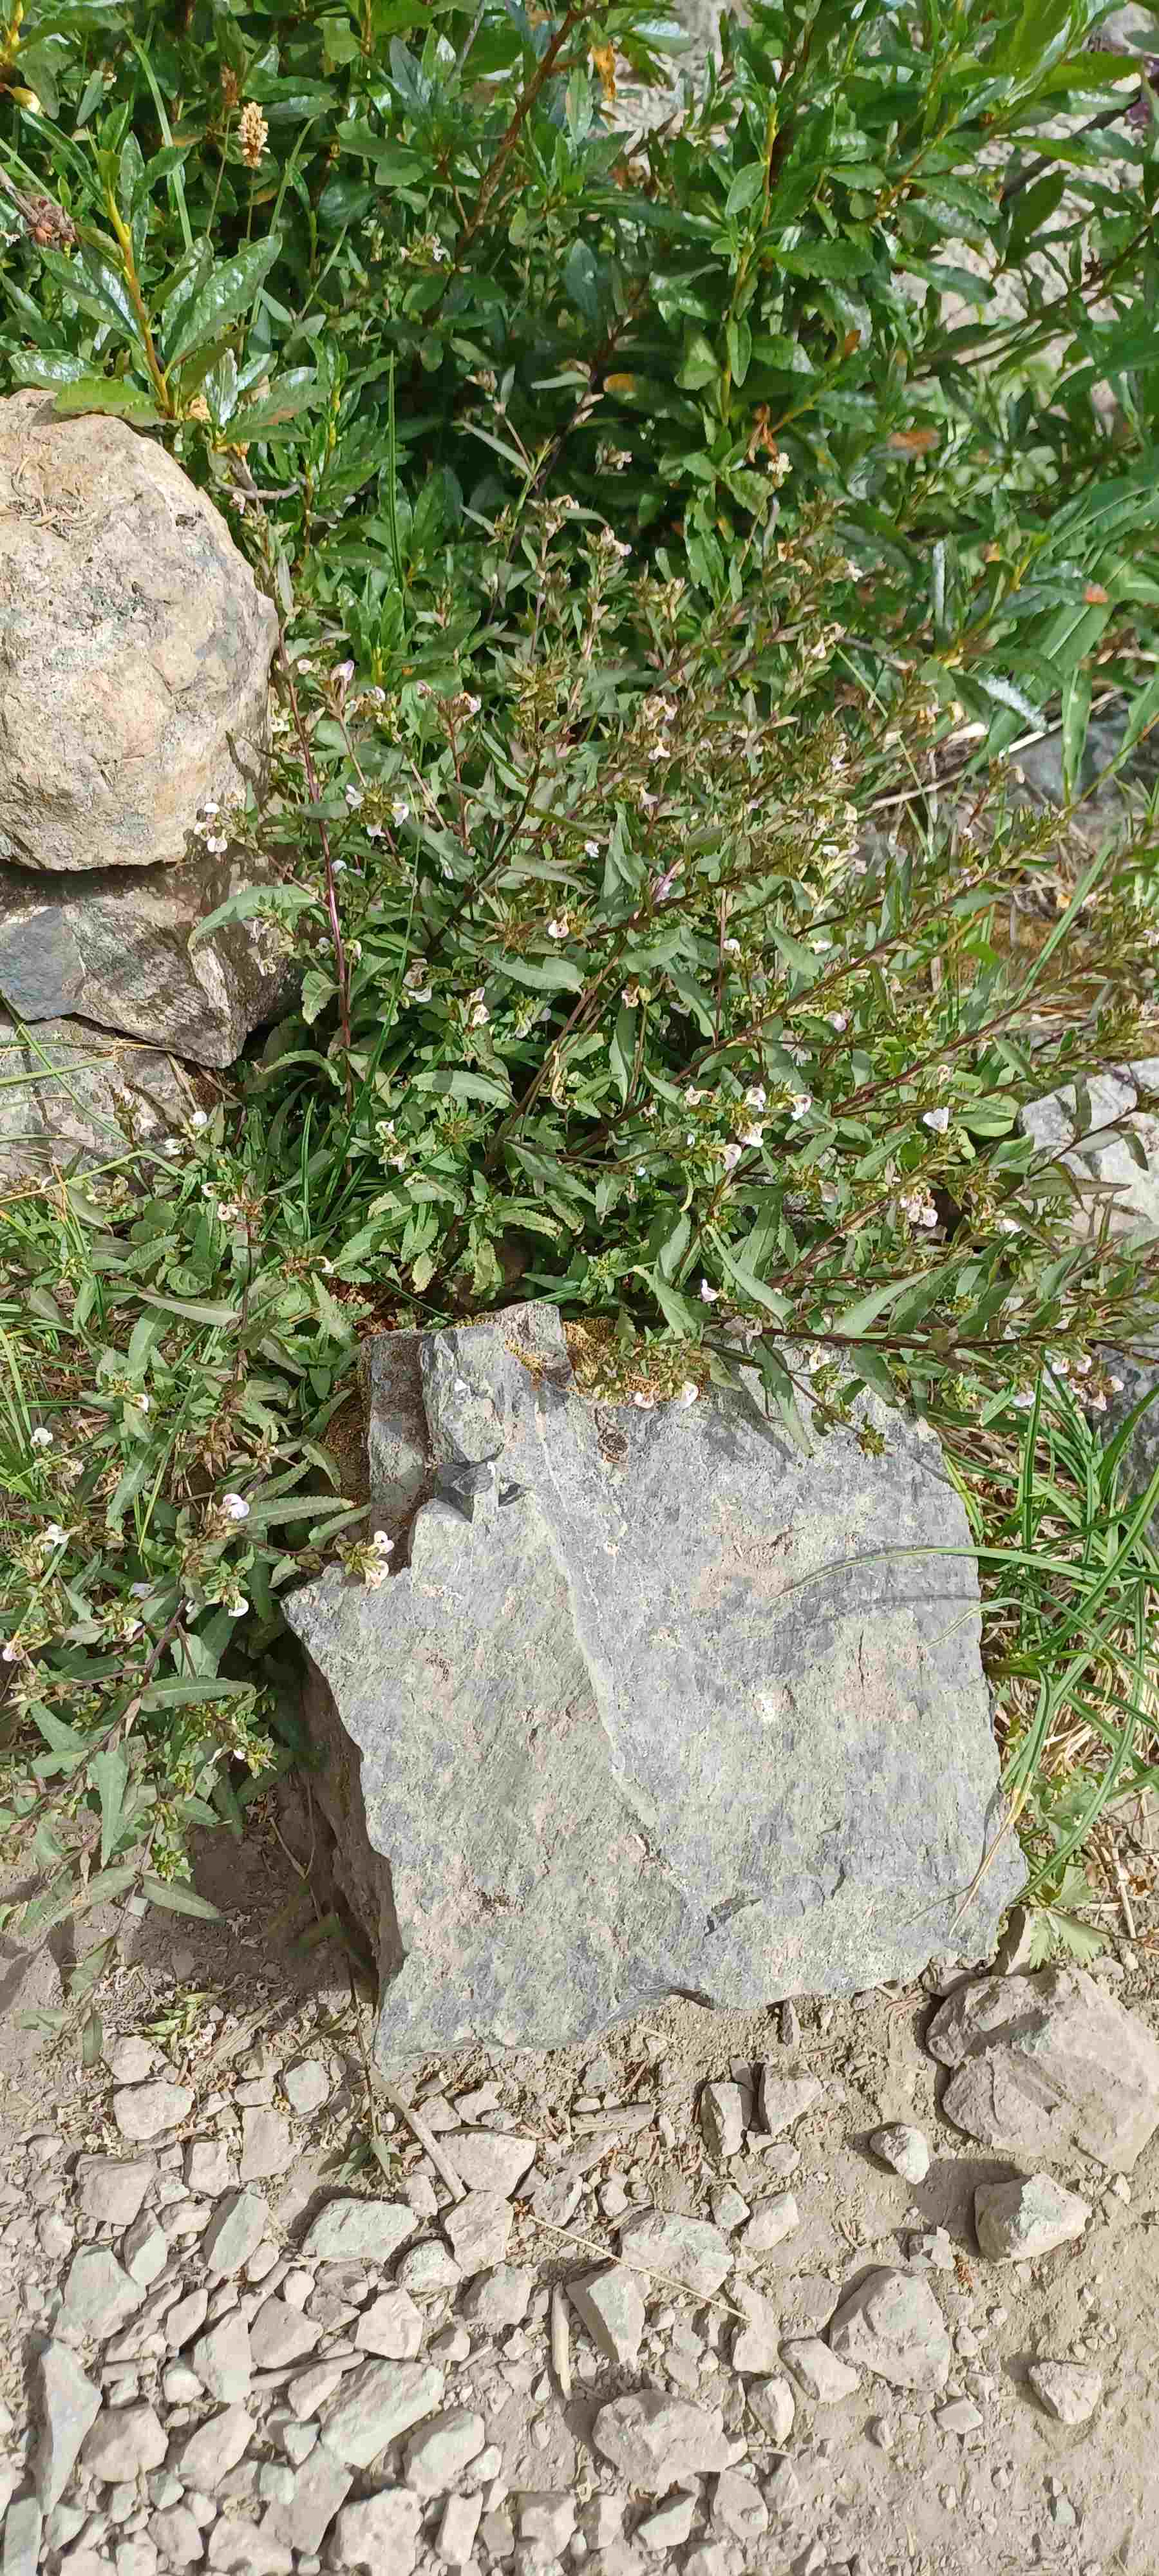 Pedicularis racemosa plant growing at mid-elevation near Marmot Pass, WA. 